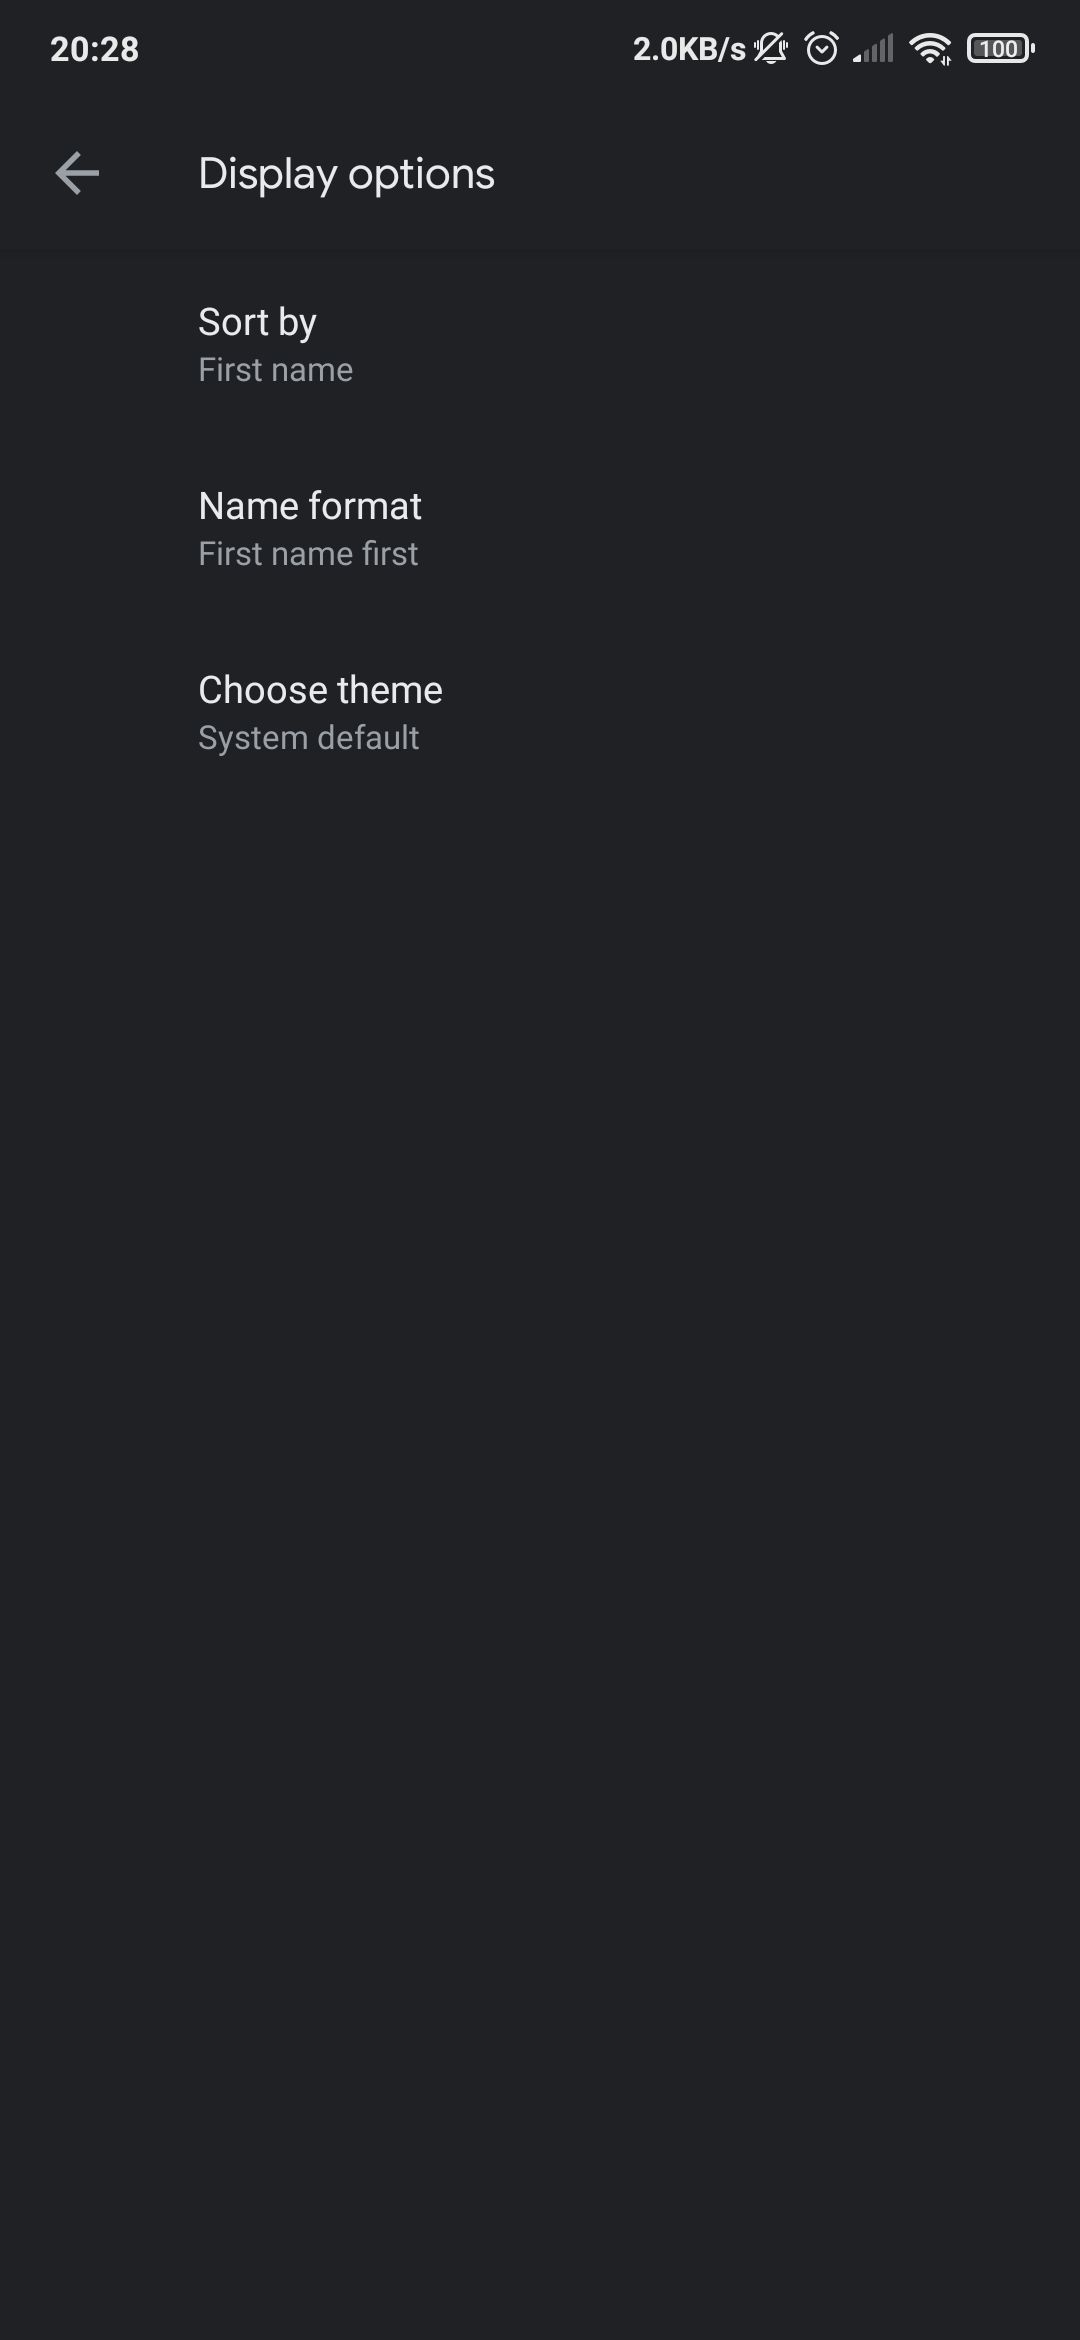 Display options in Google's phone app